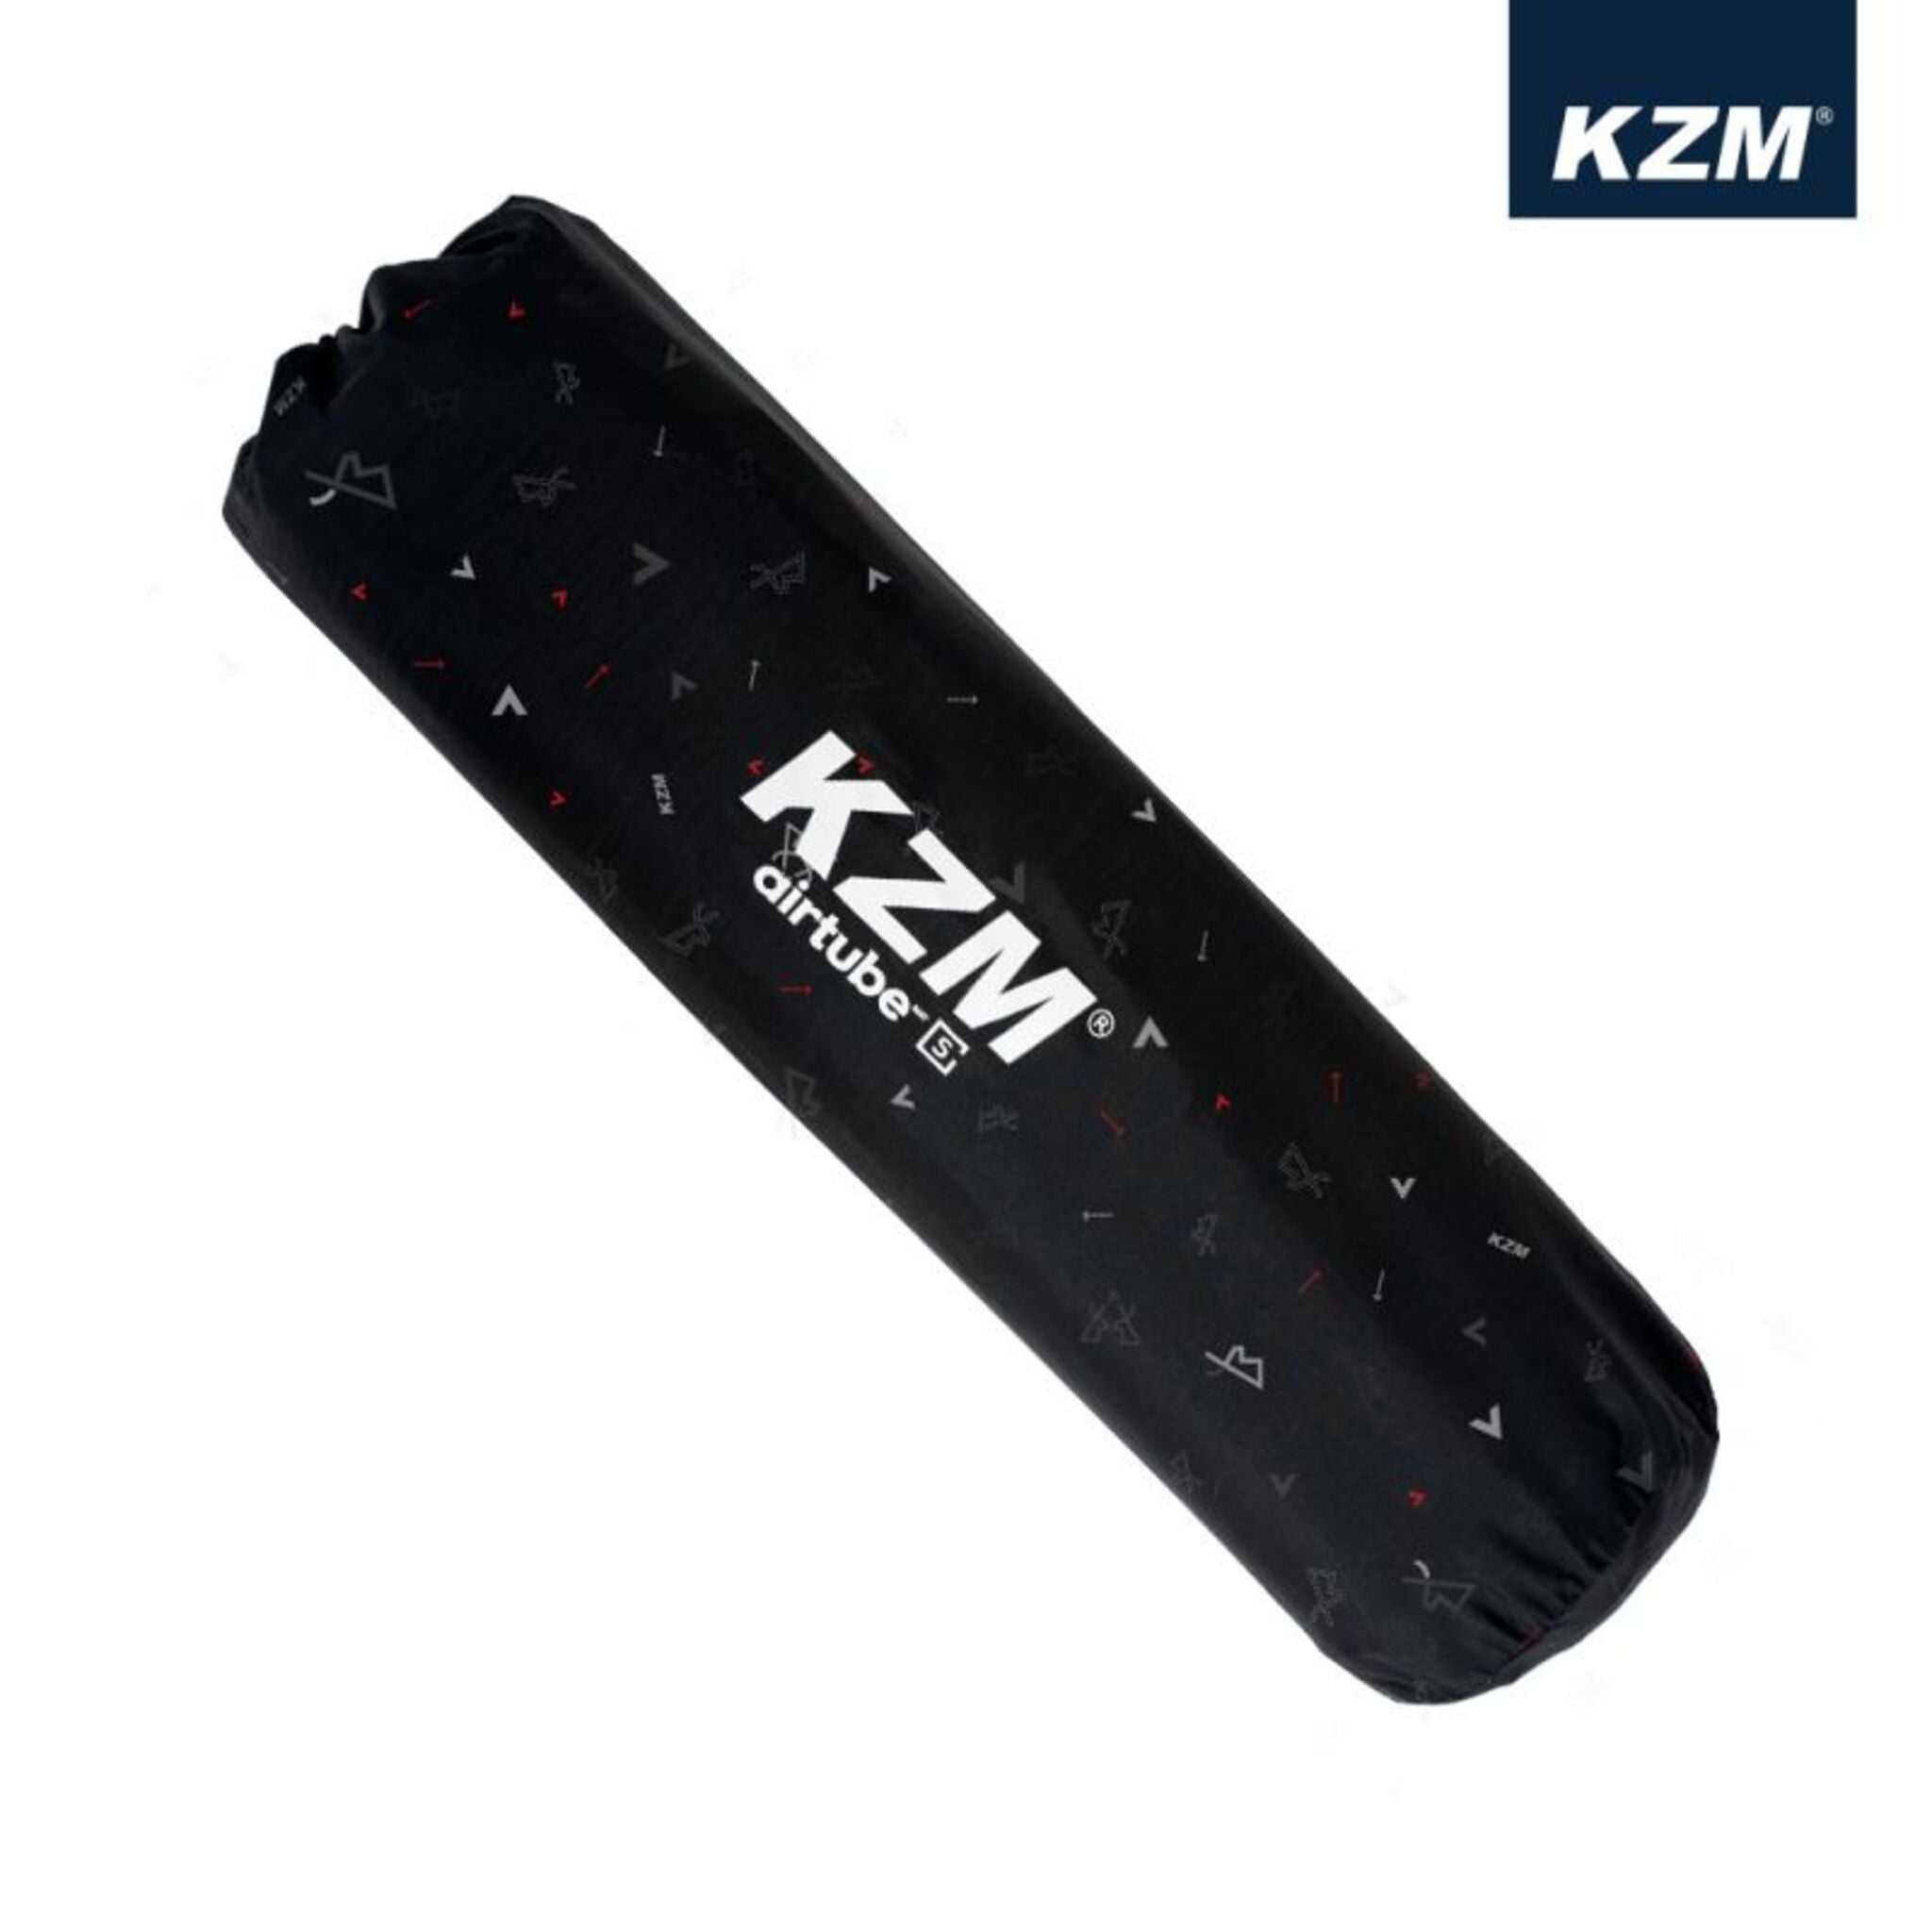 KAZMI KZM 自動充氣單人床墊 深藍 K20T3M003